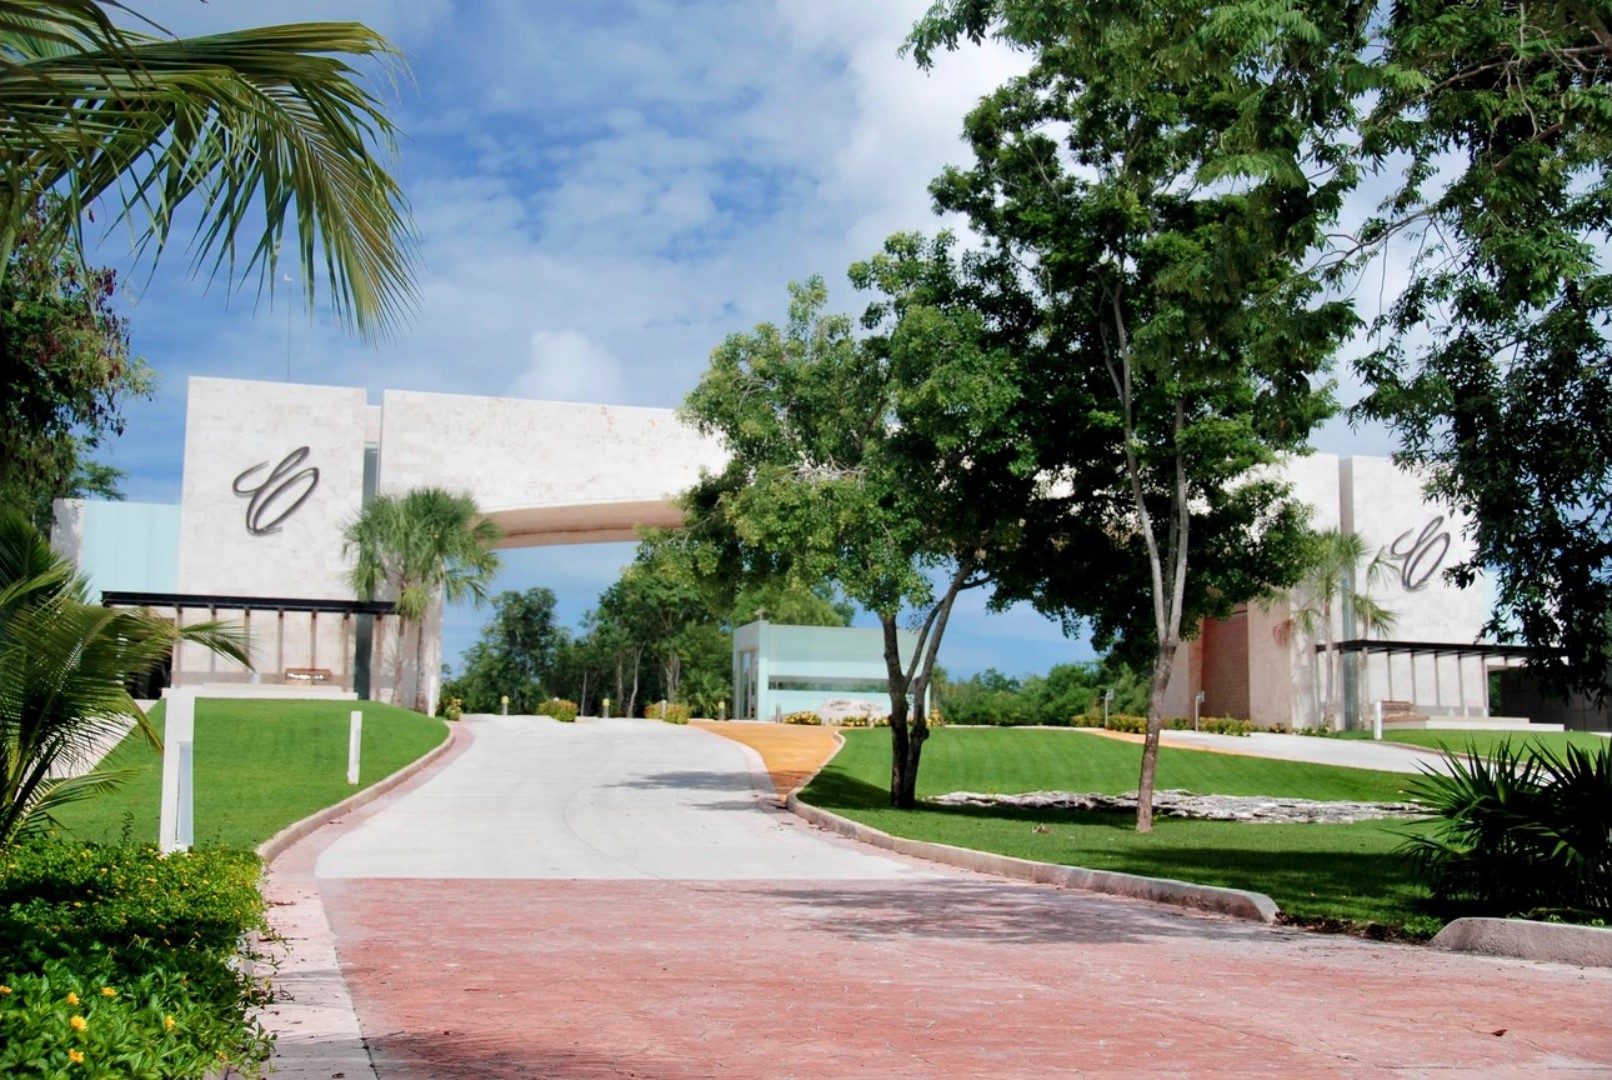 Cancún Country Club - Vista Hermosa | Lotes Urbanizados Venta